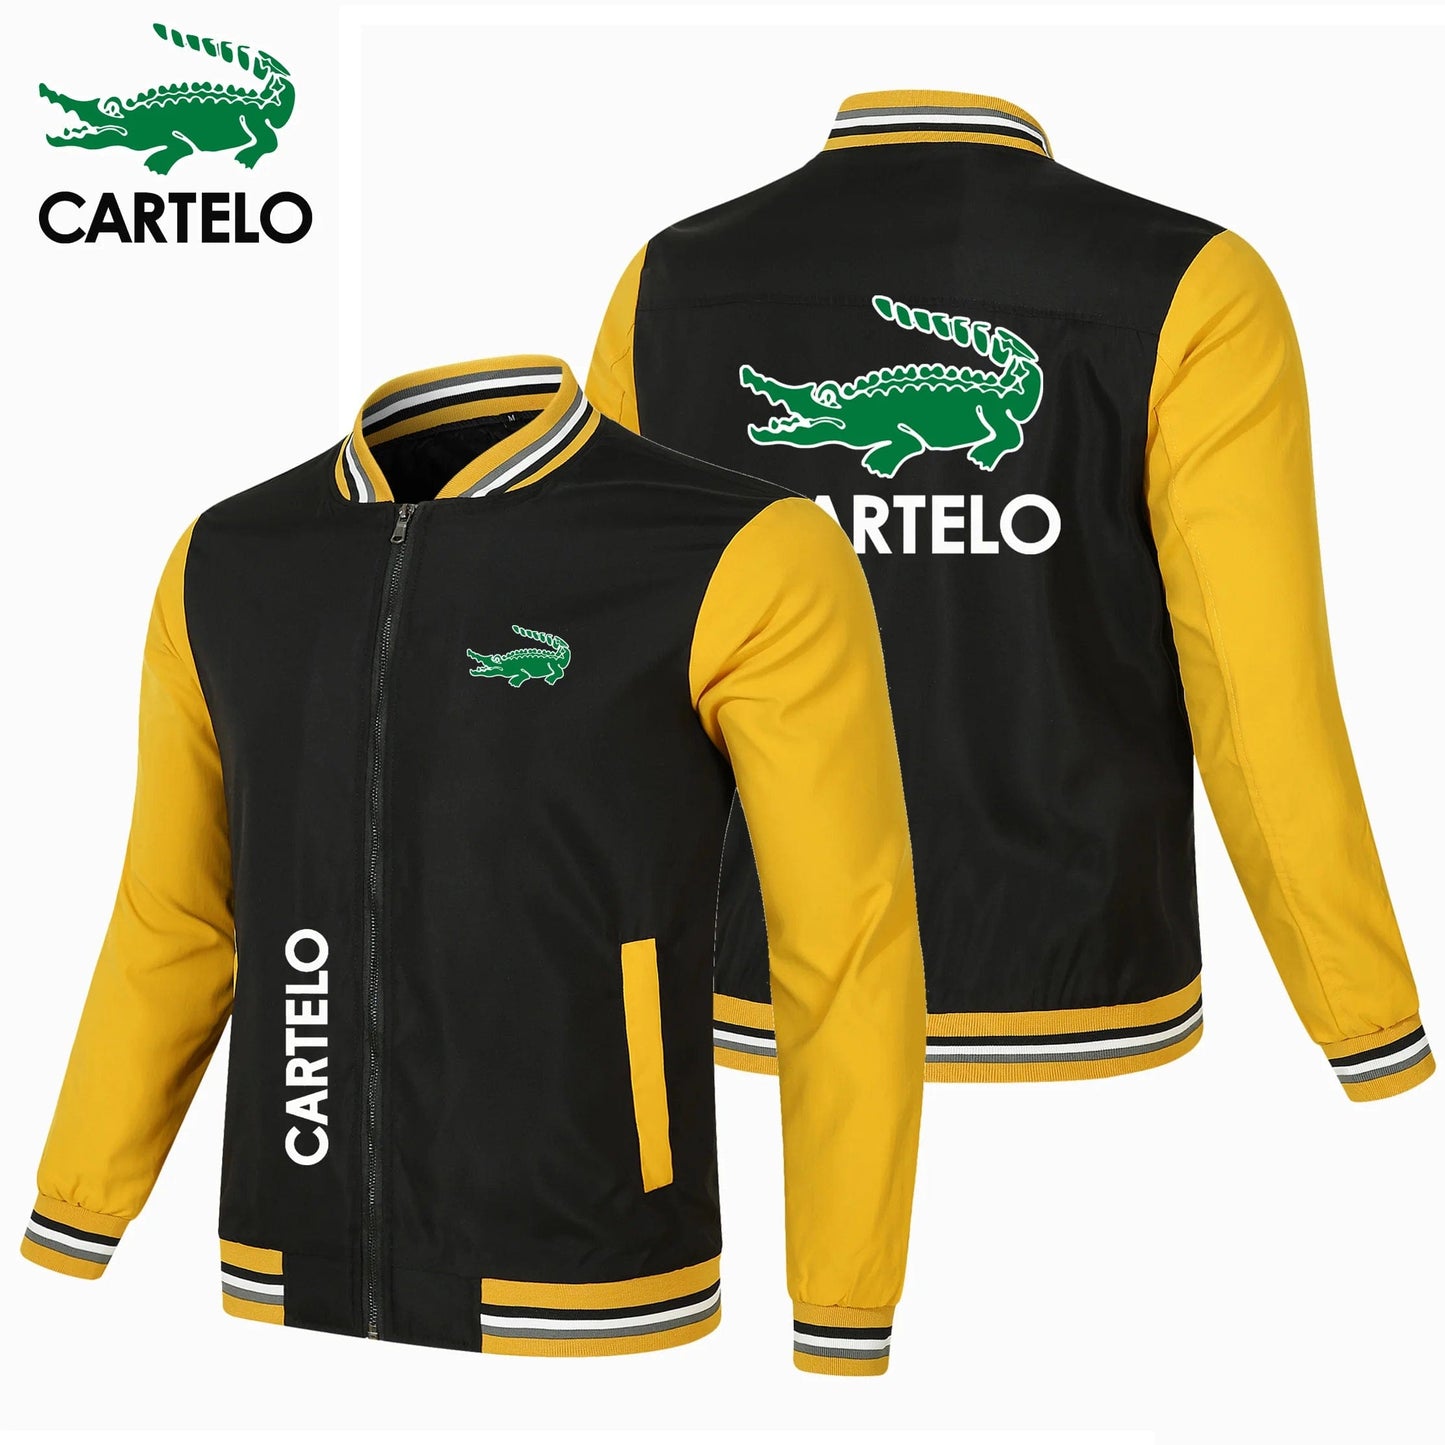 Cartelo Baseball jacket Men's printed jacket Fitness coat unisex trench coat zip-up top Thin Custom Aviator plus size Jacket S-5